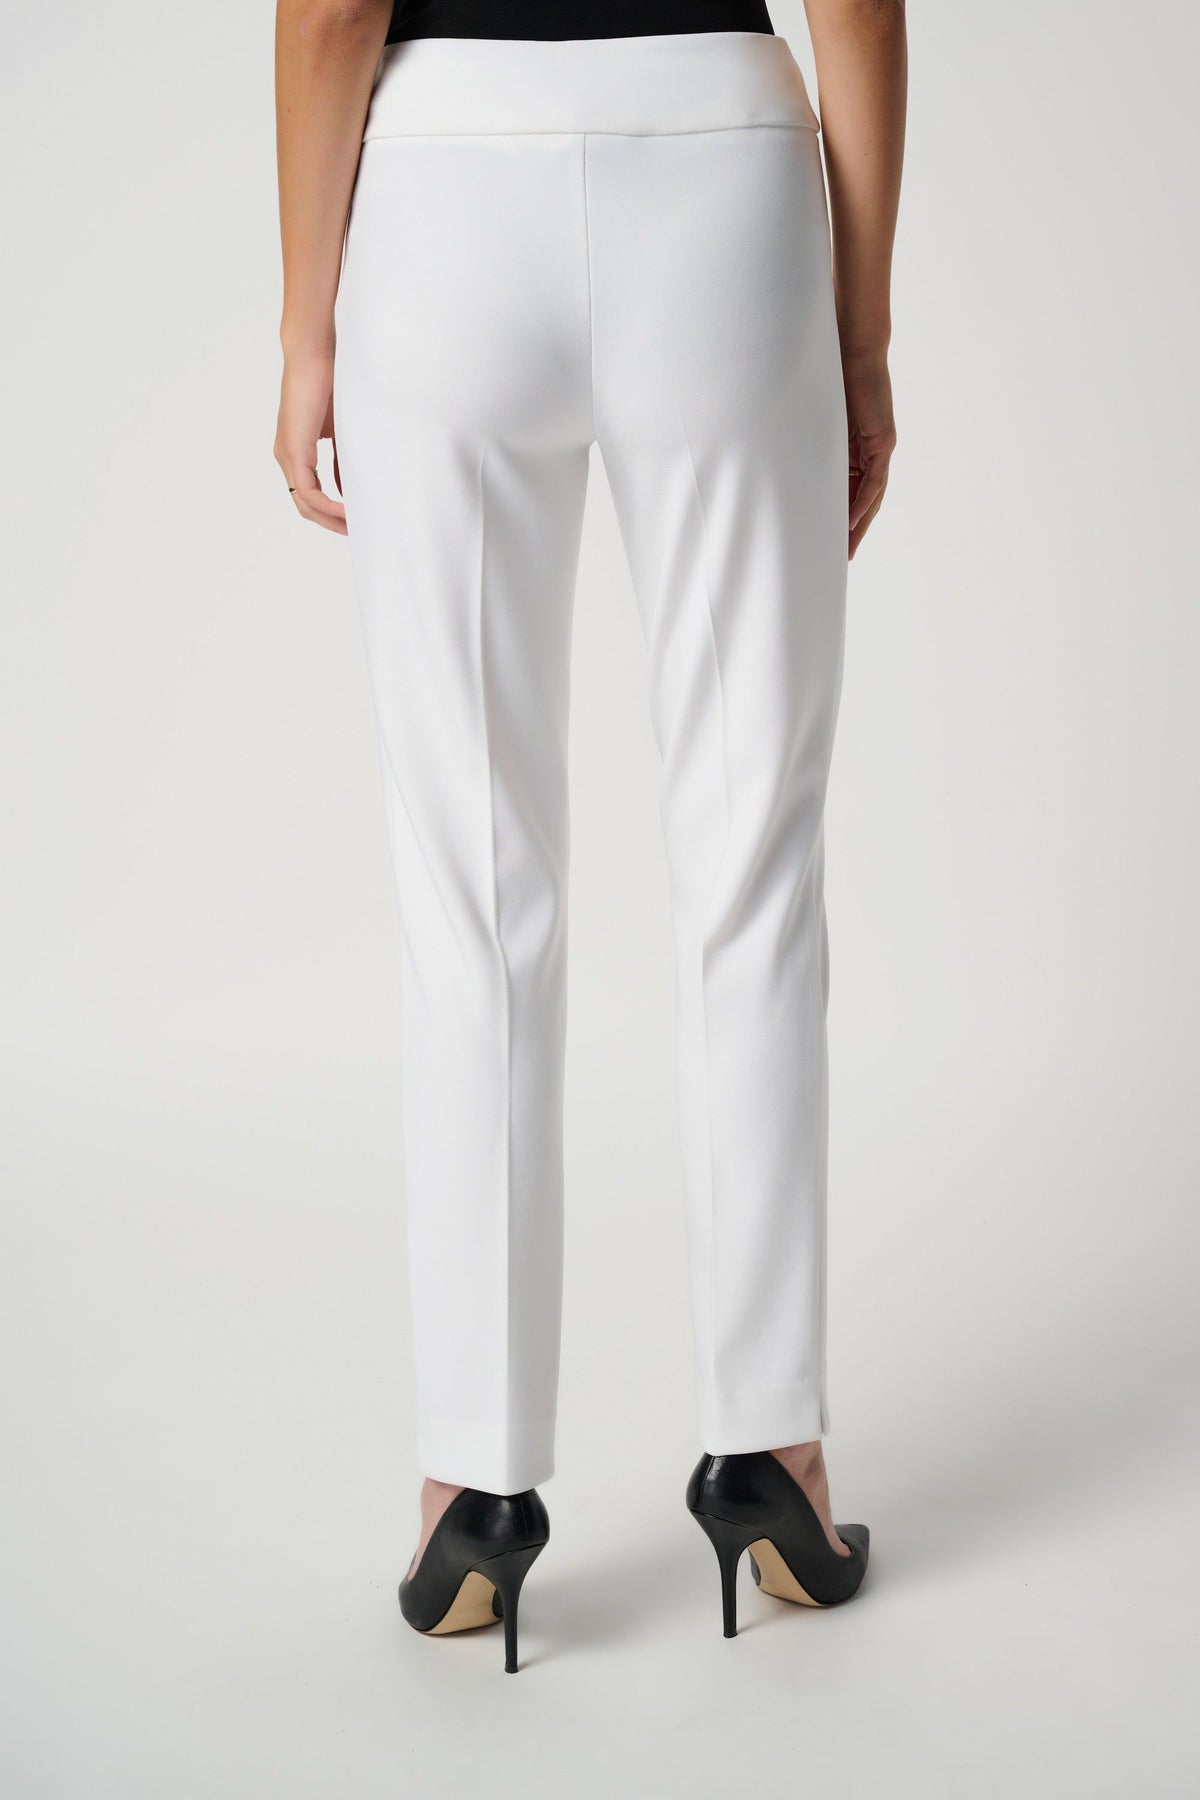 Joseph Ribkoff Slim Fit Pull-On Pant - Style 144092, back, vanilla